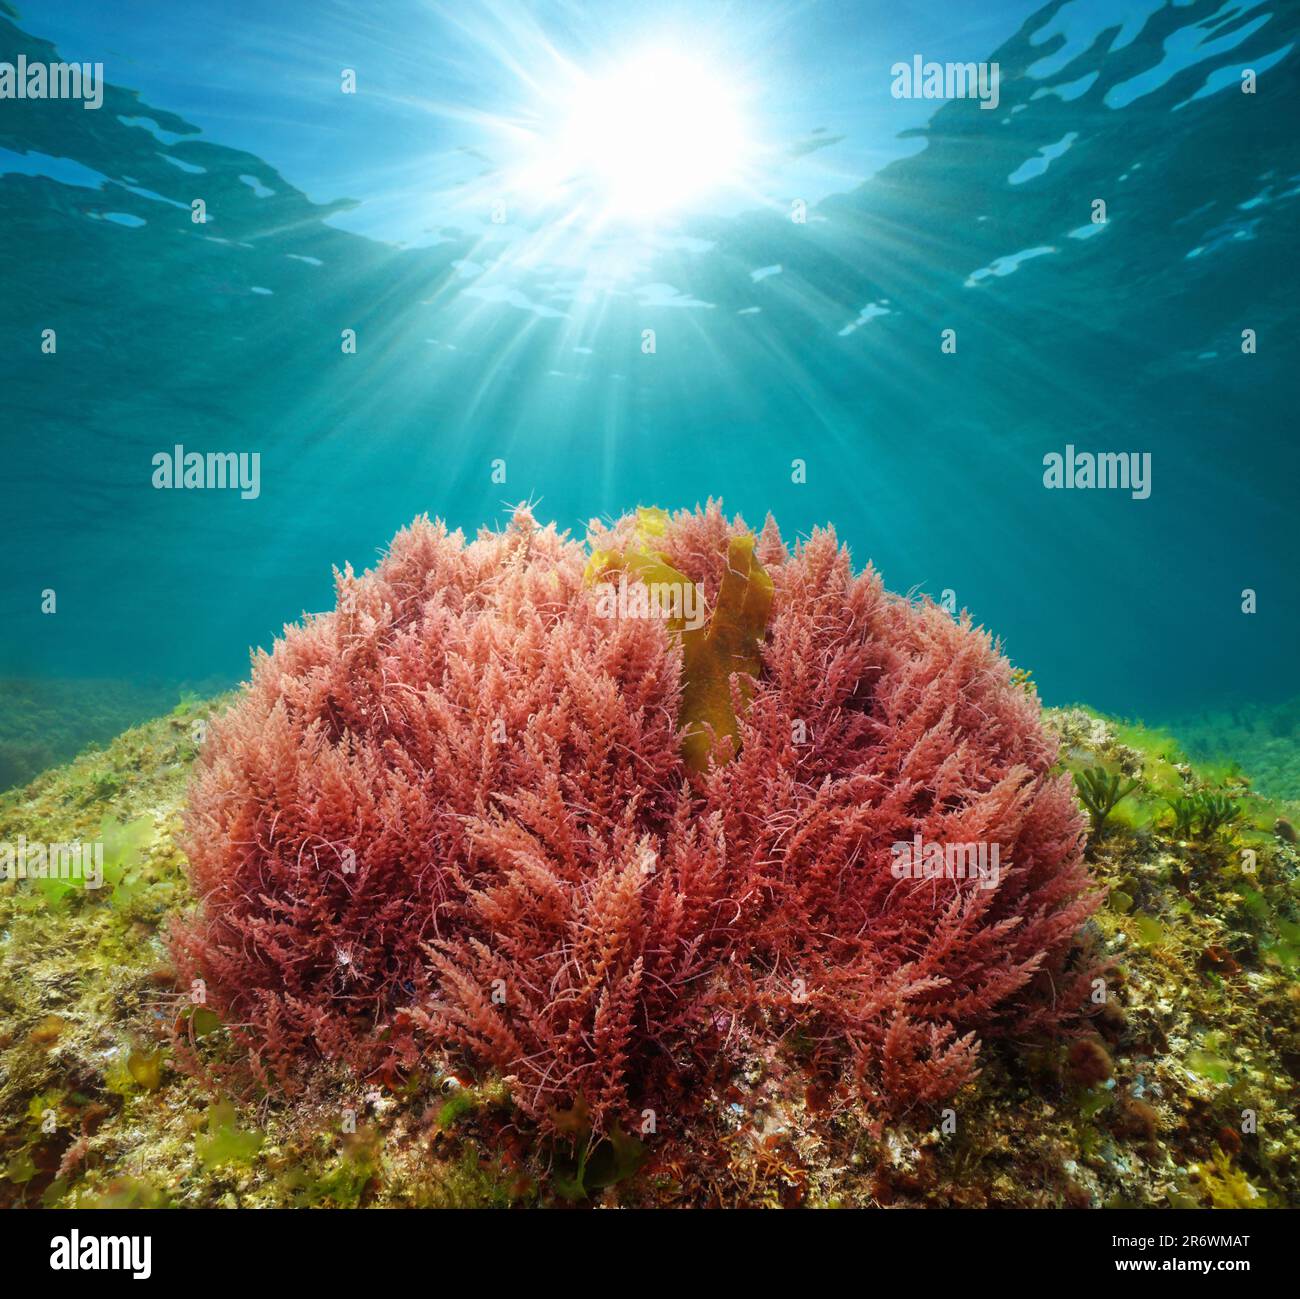 Alghe rosse con la luce del sole sott'acqua nell'oceano (alghe arpoon alga Asparagopsis armata), oceano Atlantico, Spagna, Galizia Foto Stock